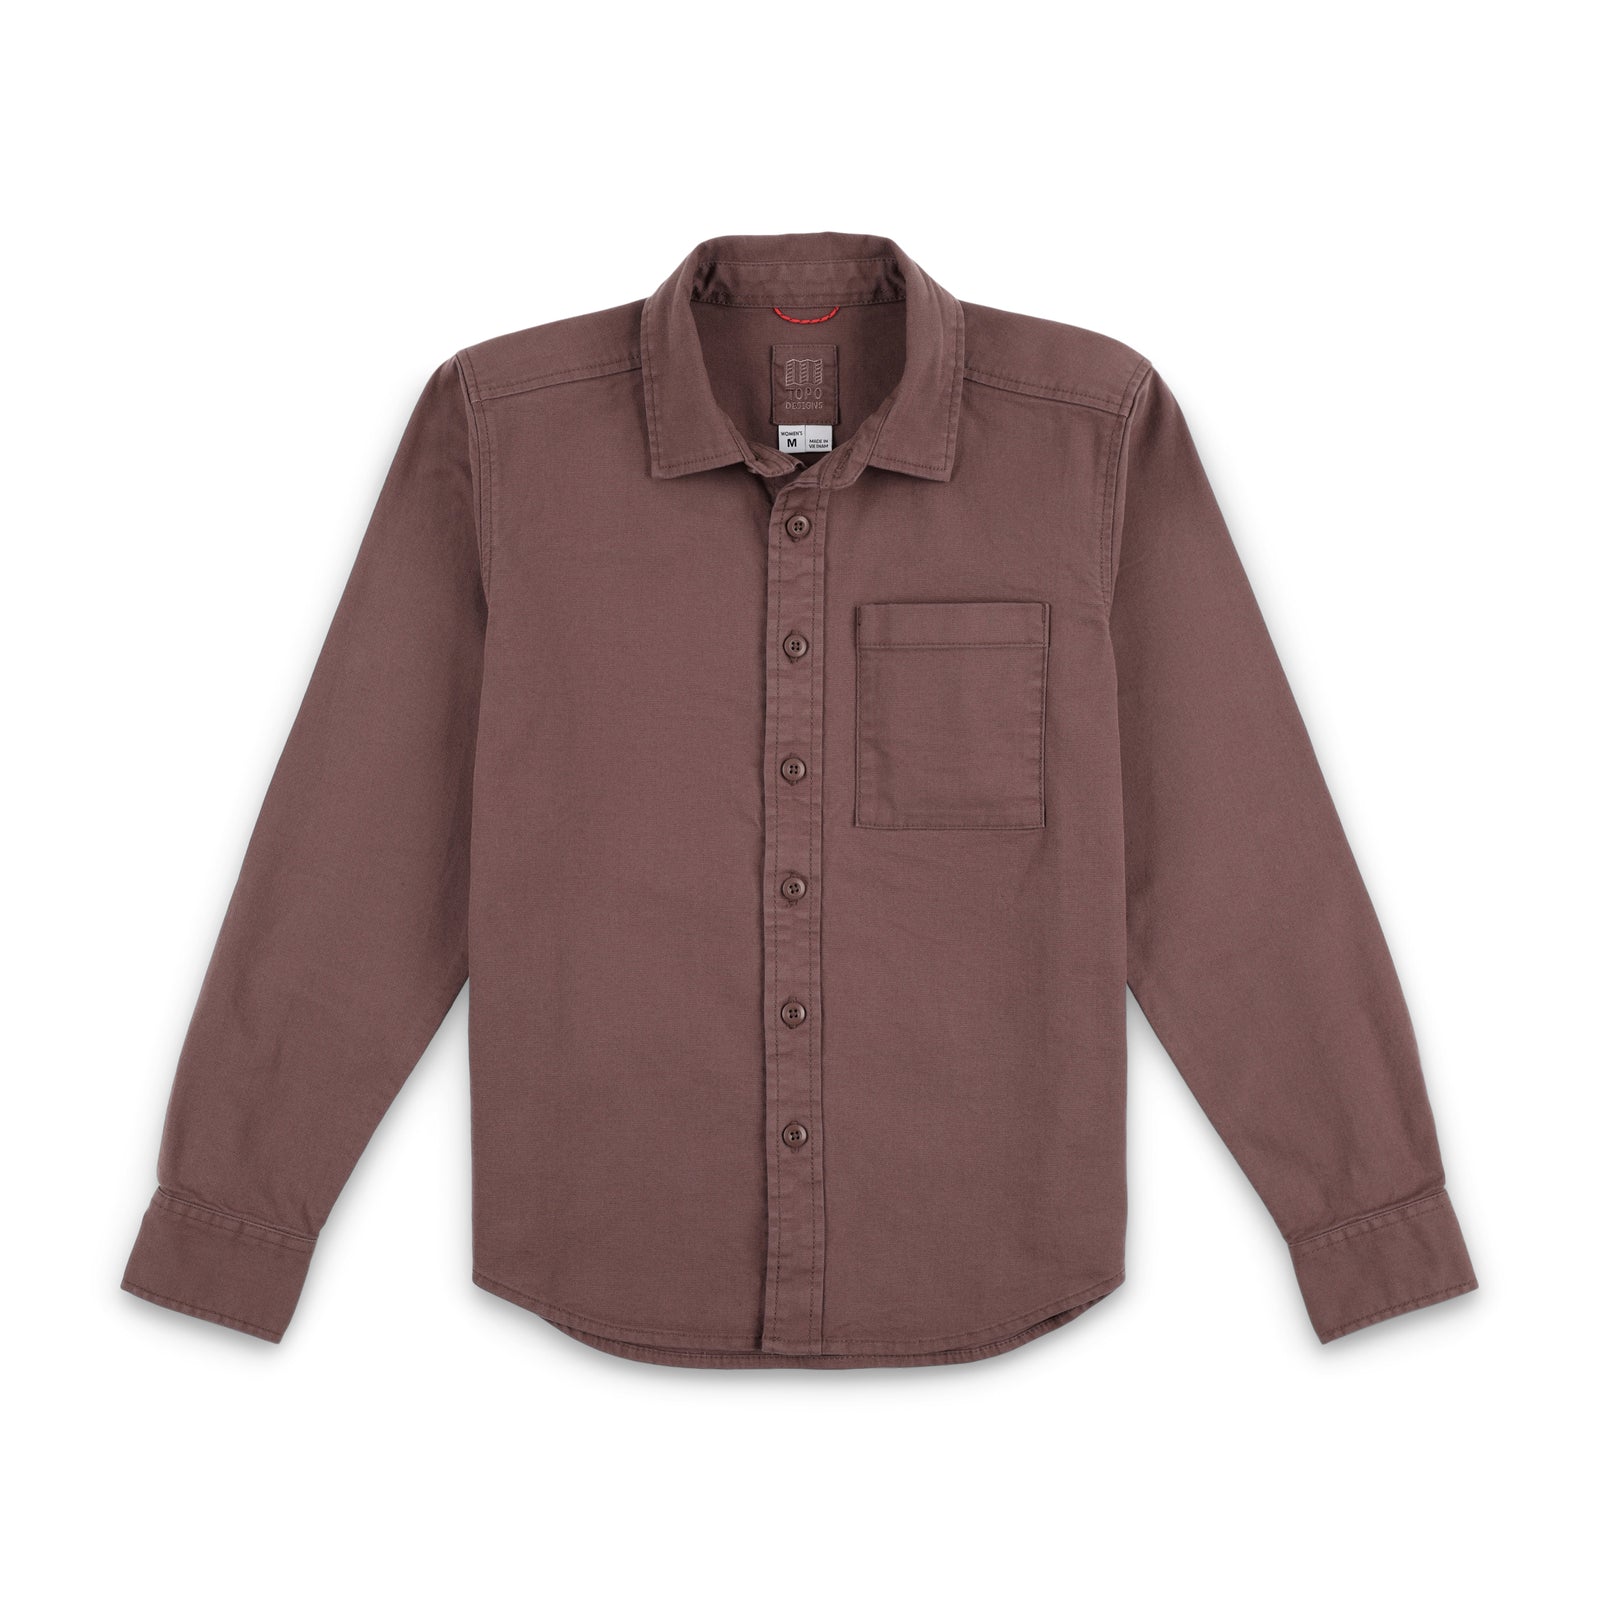 Topo Designs Women's Dirt Shirt 100% organic cotton long sleeve button-up in "peppercorn" brown purple.